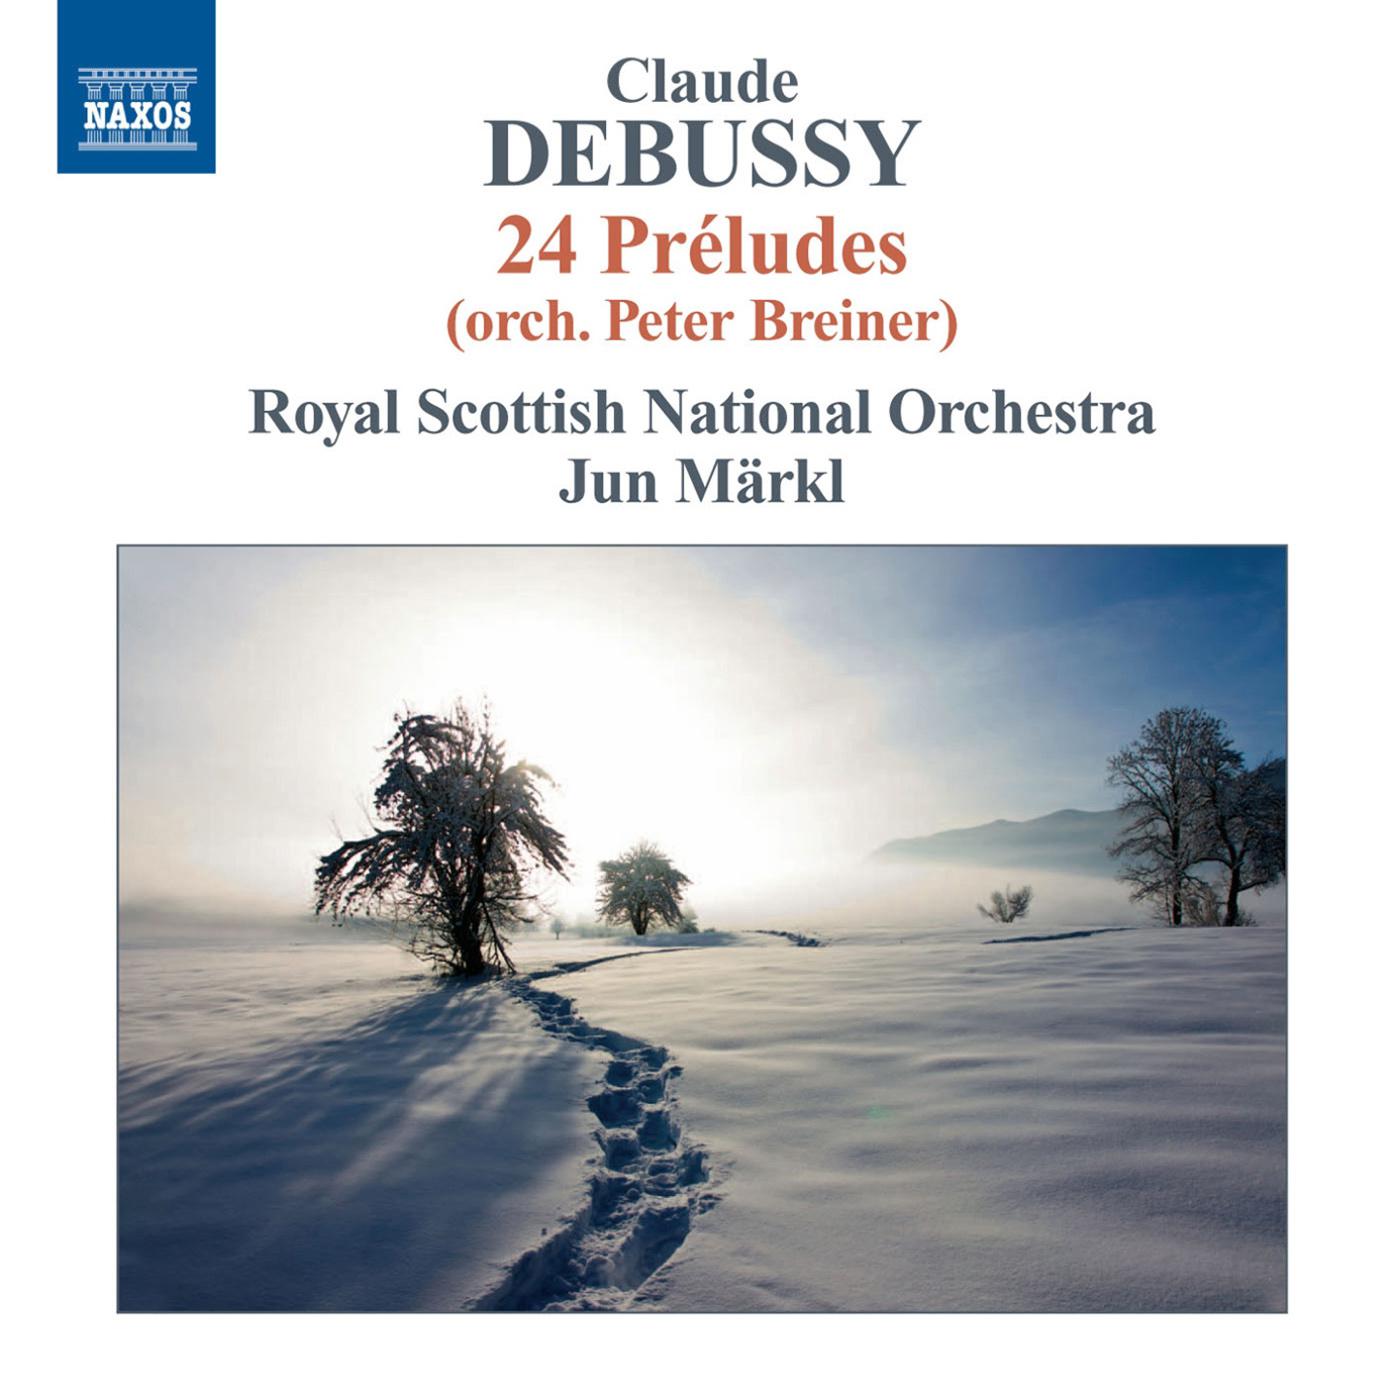 Preludes, Book 1 (arr. P. Breiner for orchestra): No. 6. Des pas sur la neige Preludes, Book 1 (arr. P. Breiner for orchestra)